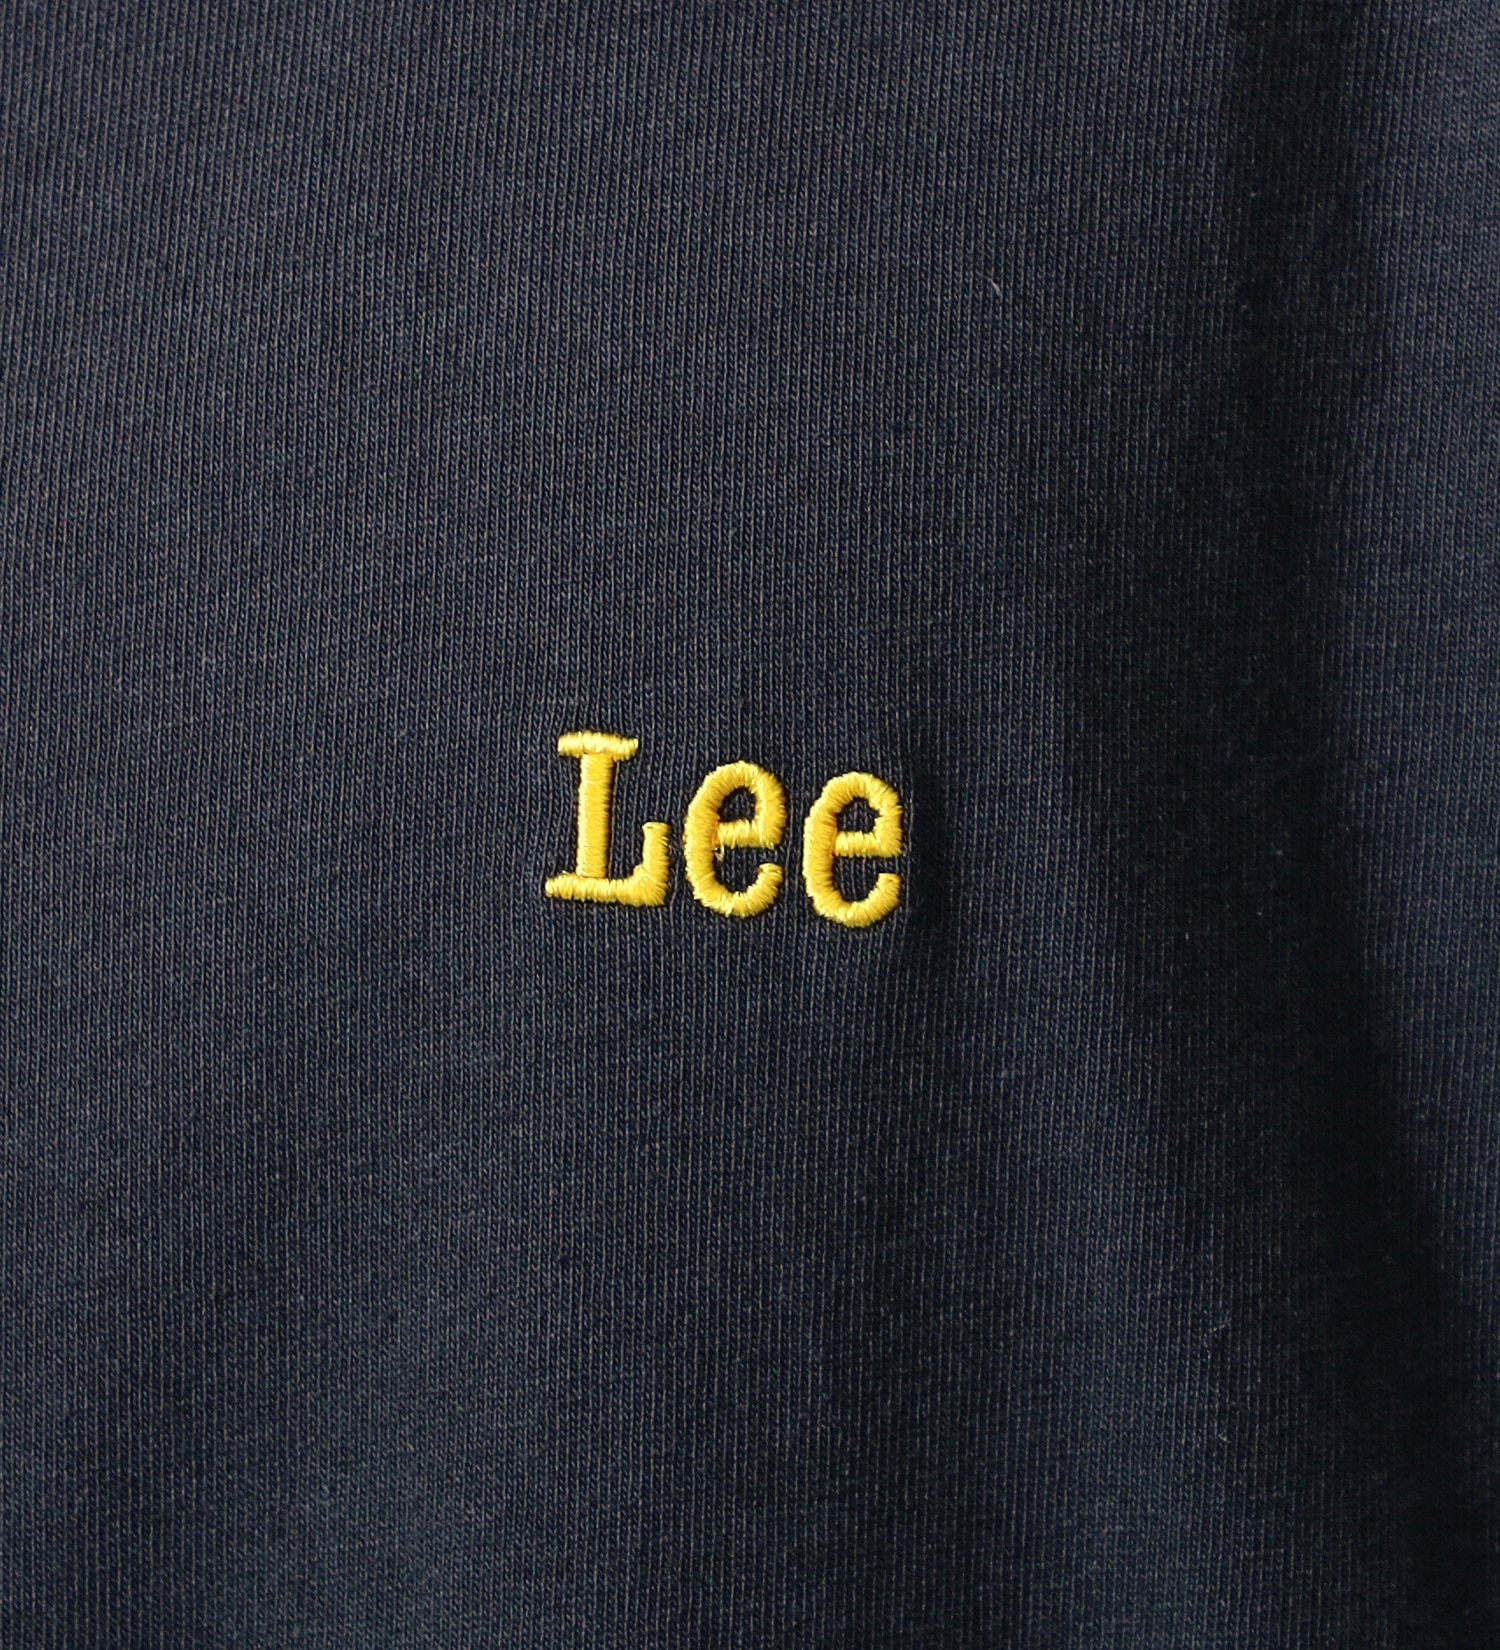 Lee(リー)のバックプリント オールドアド ネオン ショートスリーブTee|トップス/Tシャツ/カットソー/メンズ|チャコール